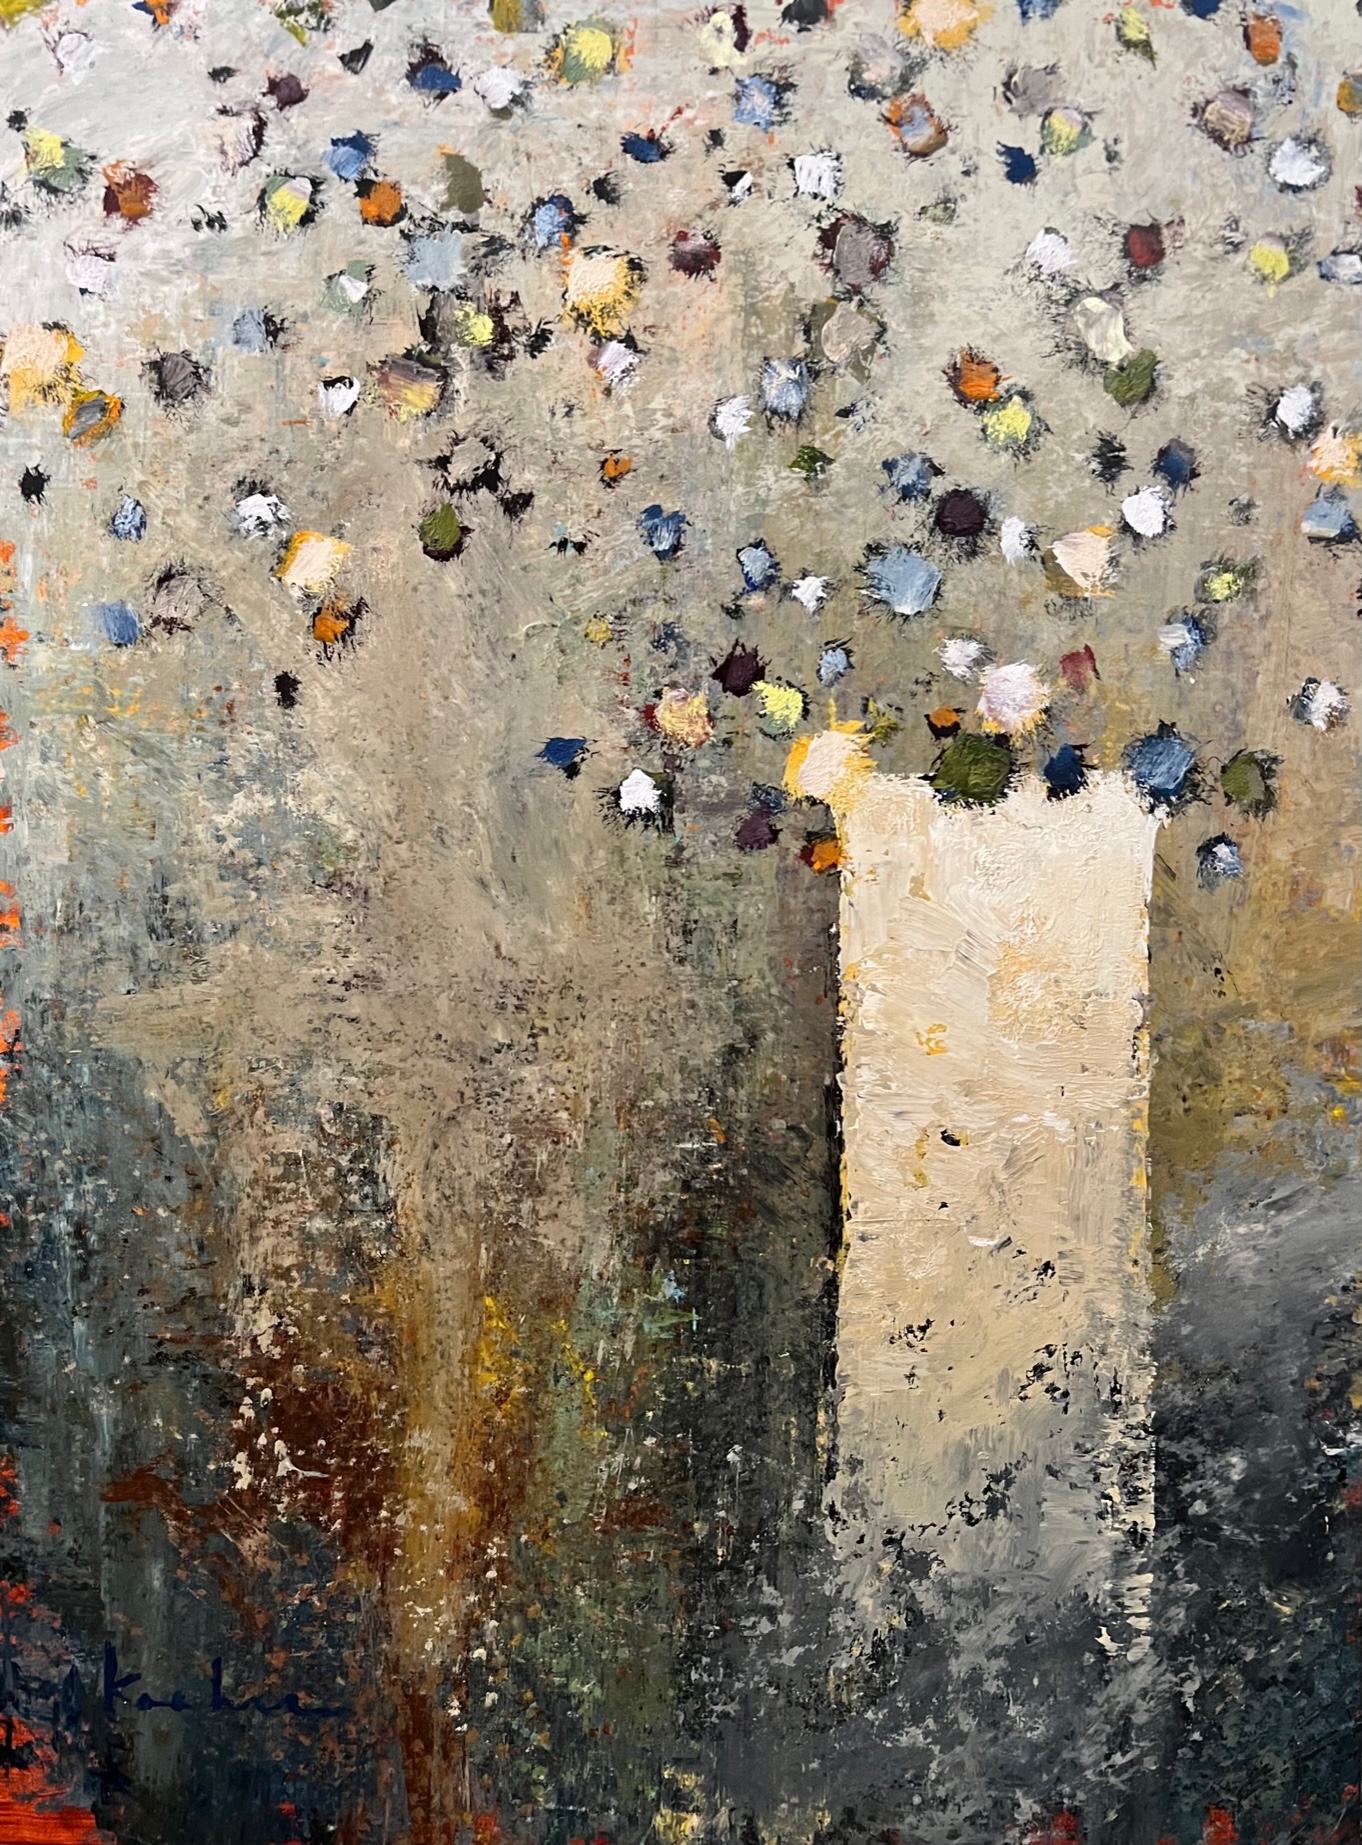 JEFF KOEHN - Colorful Arrangement - Oil on Canvas - 42x32 inches